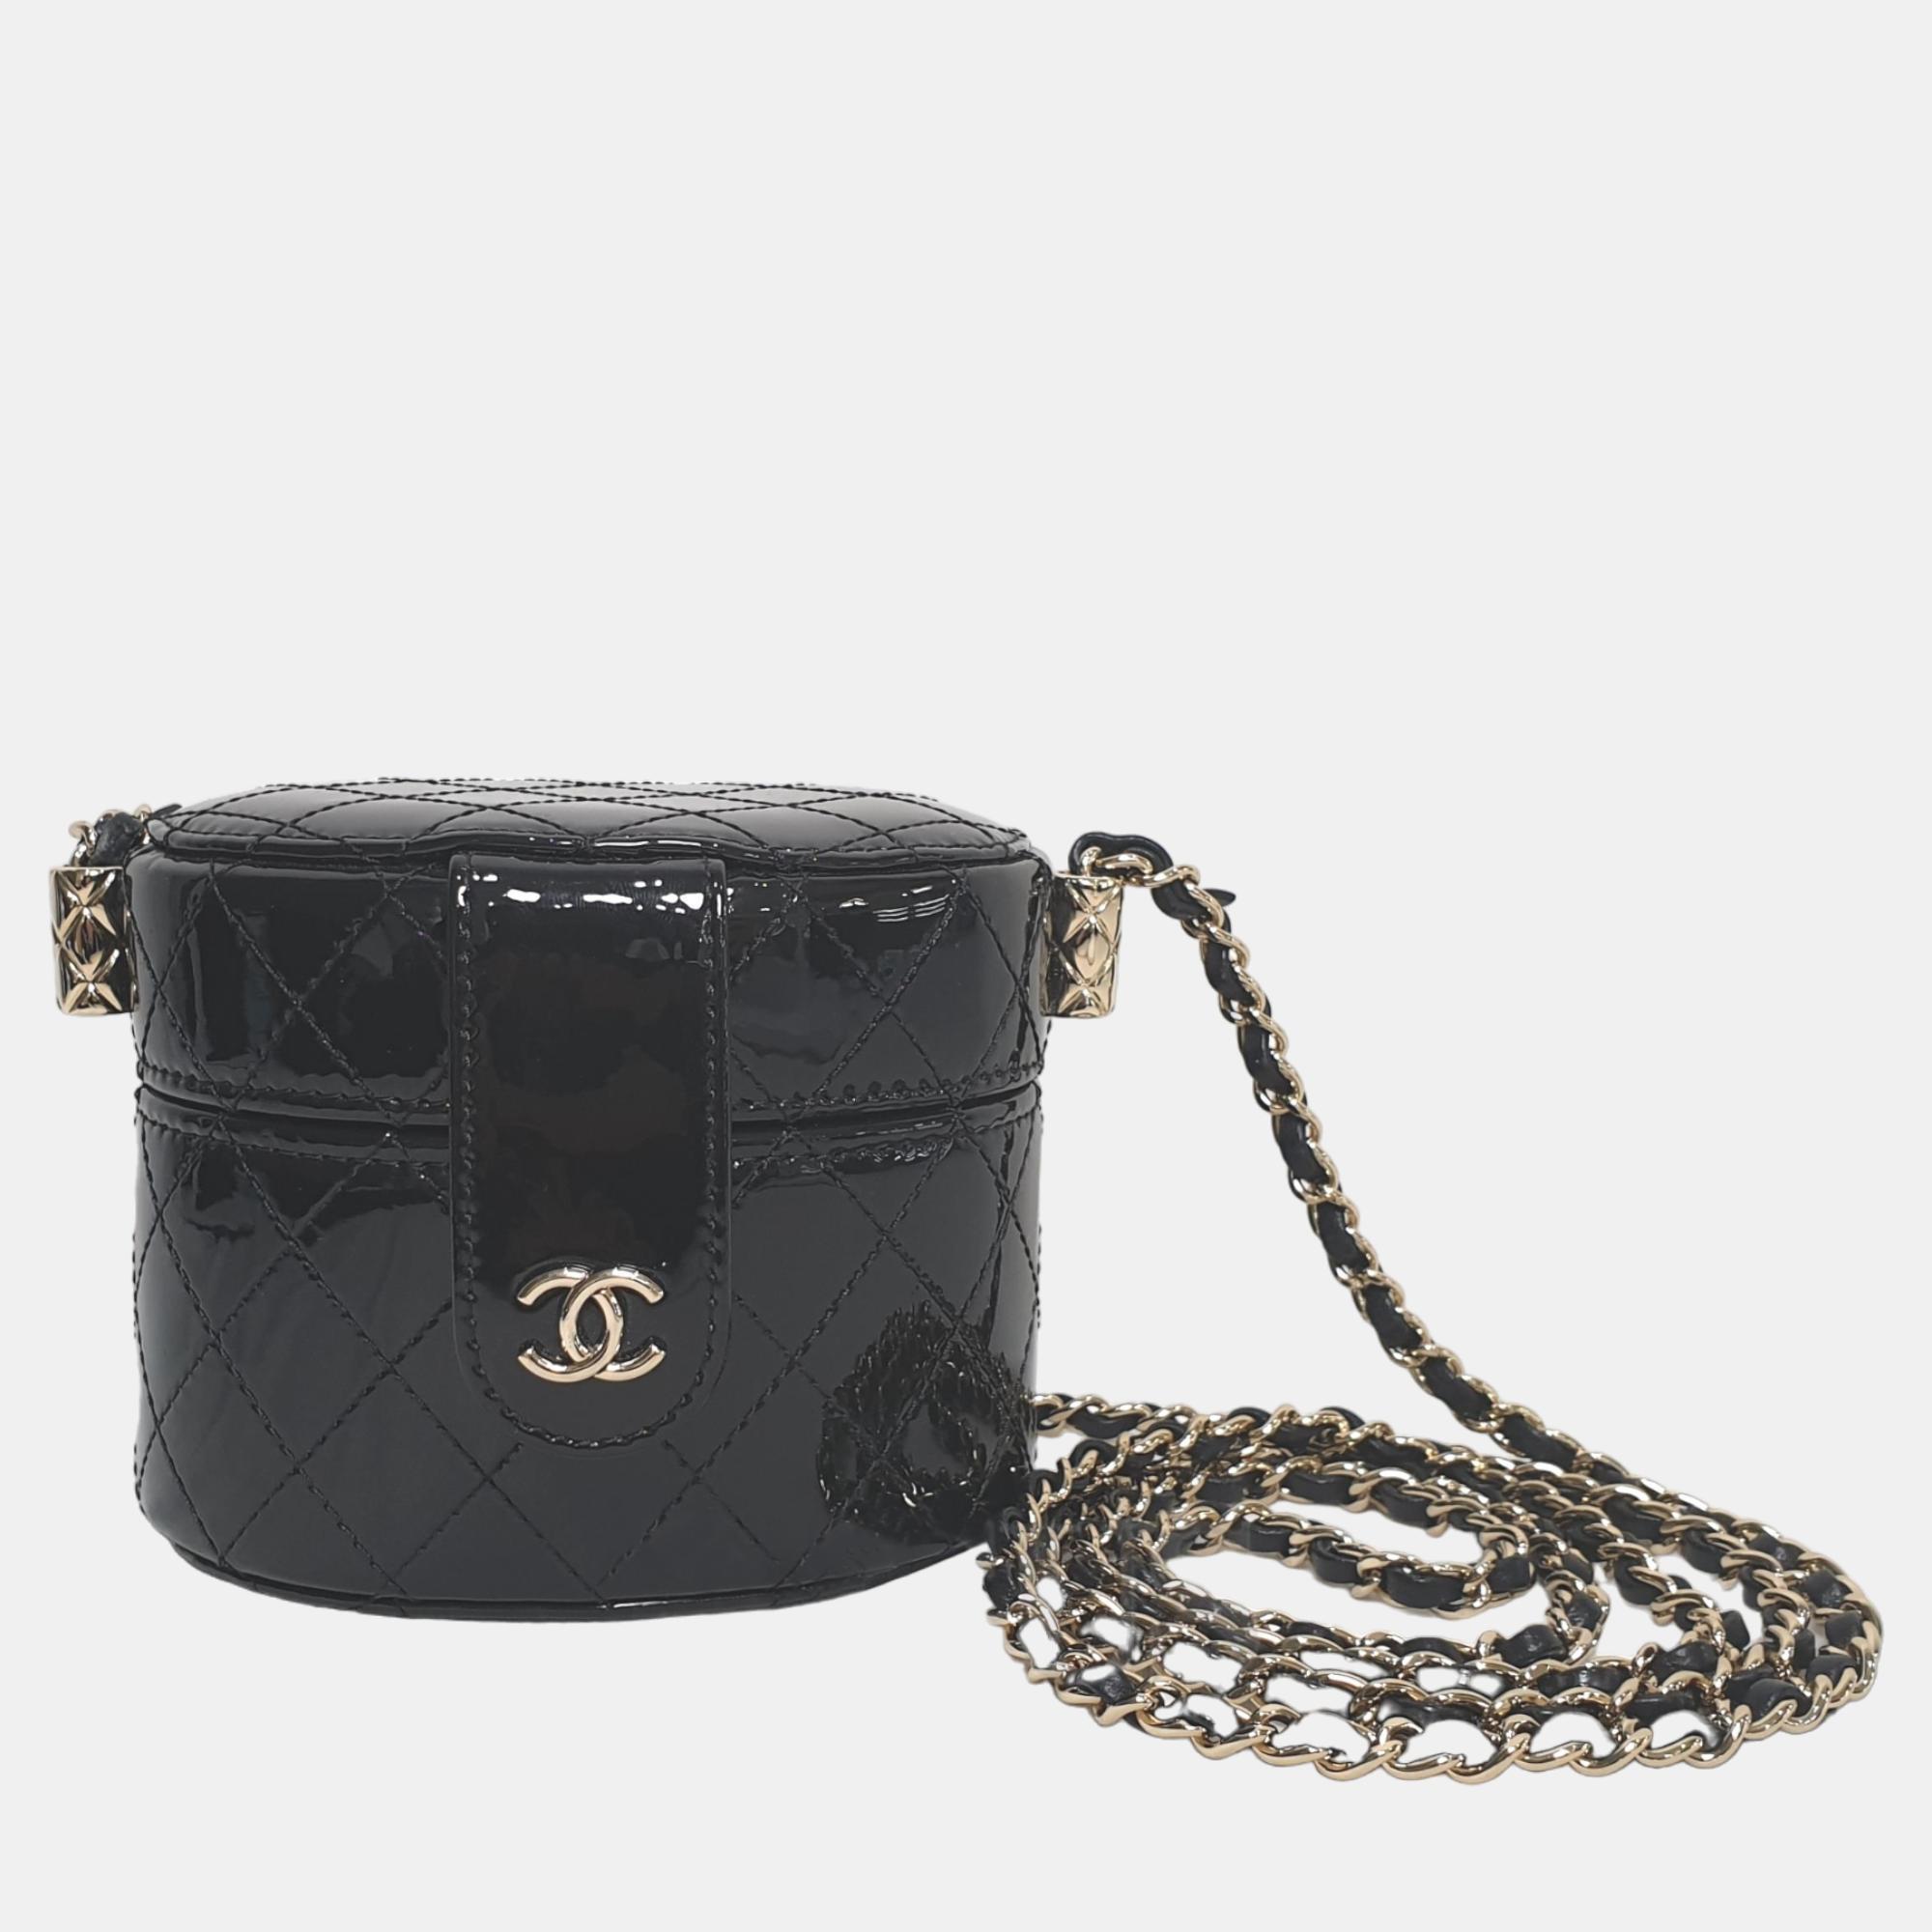 Chanel black patent leather mini vanity case